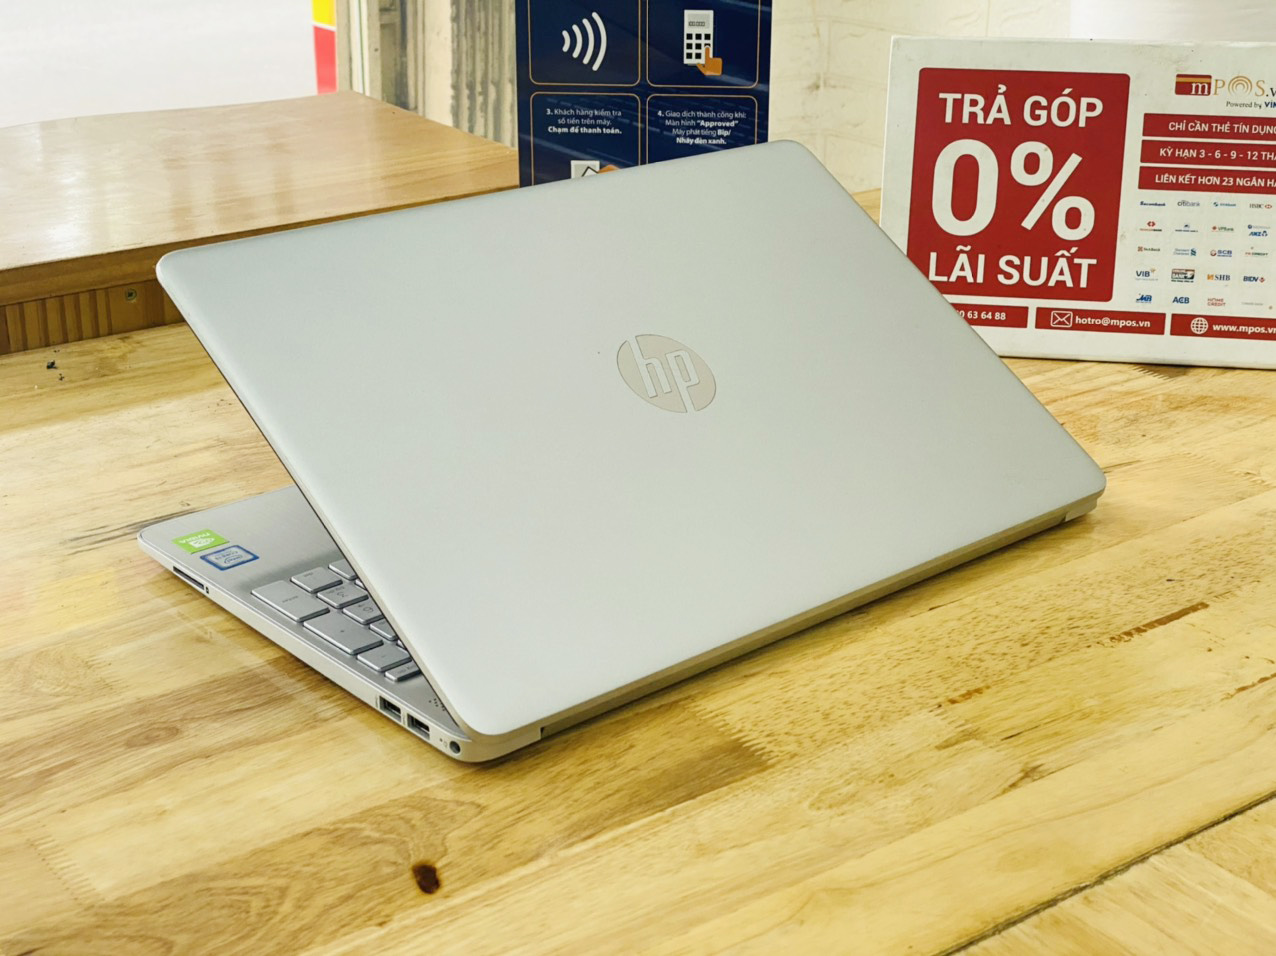 Laptop HP 15s-du0042TX i3-7020U Ram 4G SSD 128G Vga Nvidia MX110 15.6" Full HD(đời 2019)